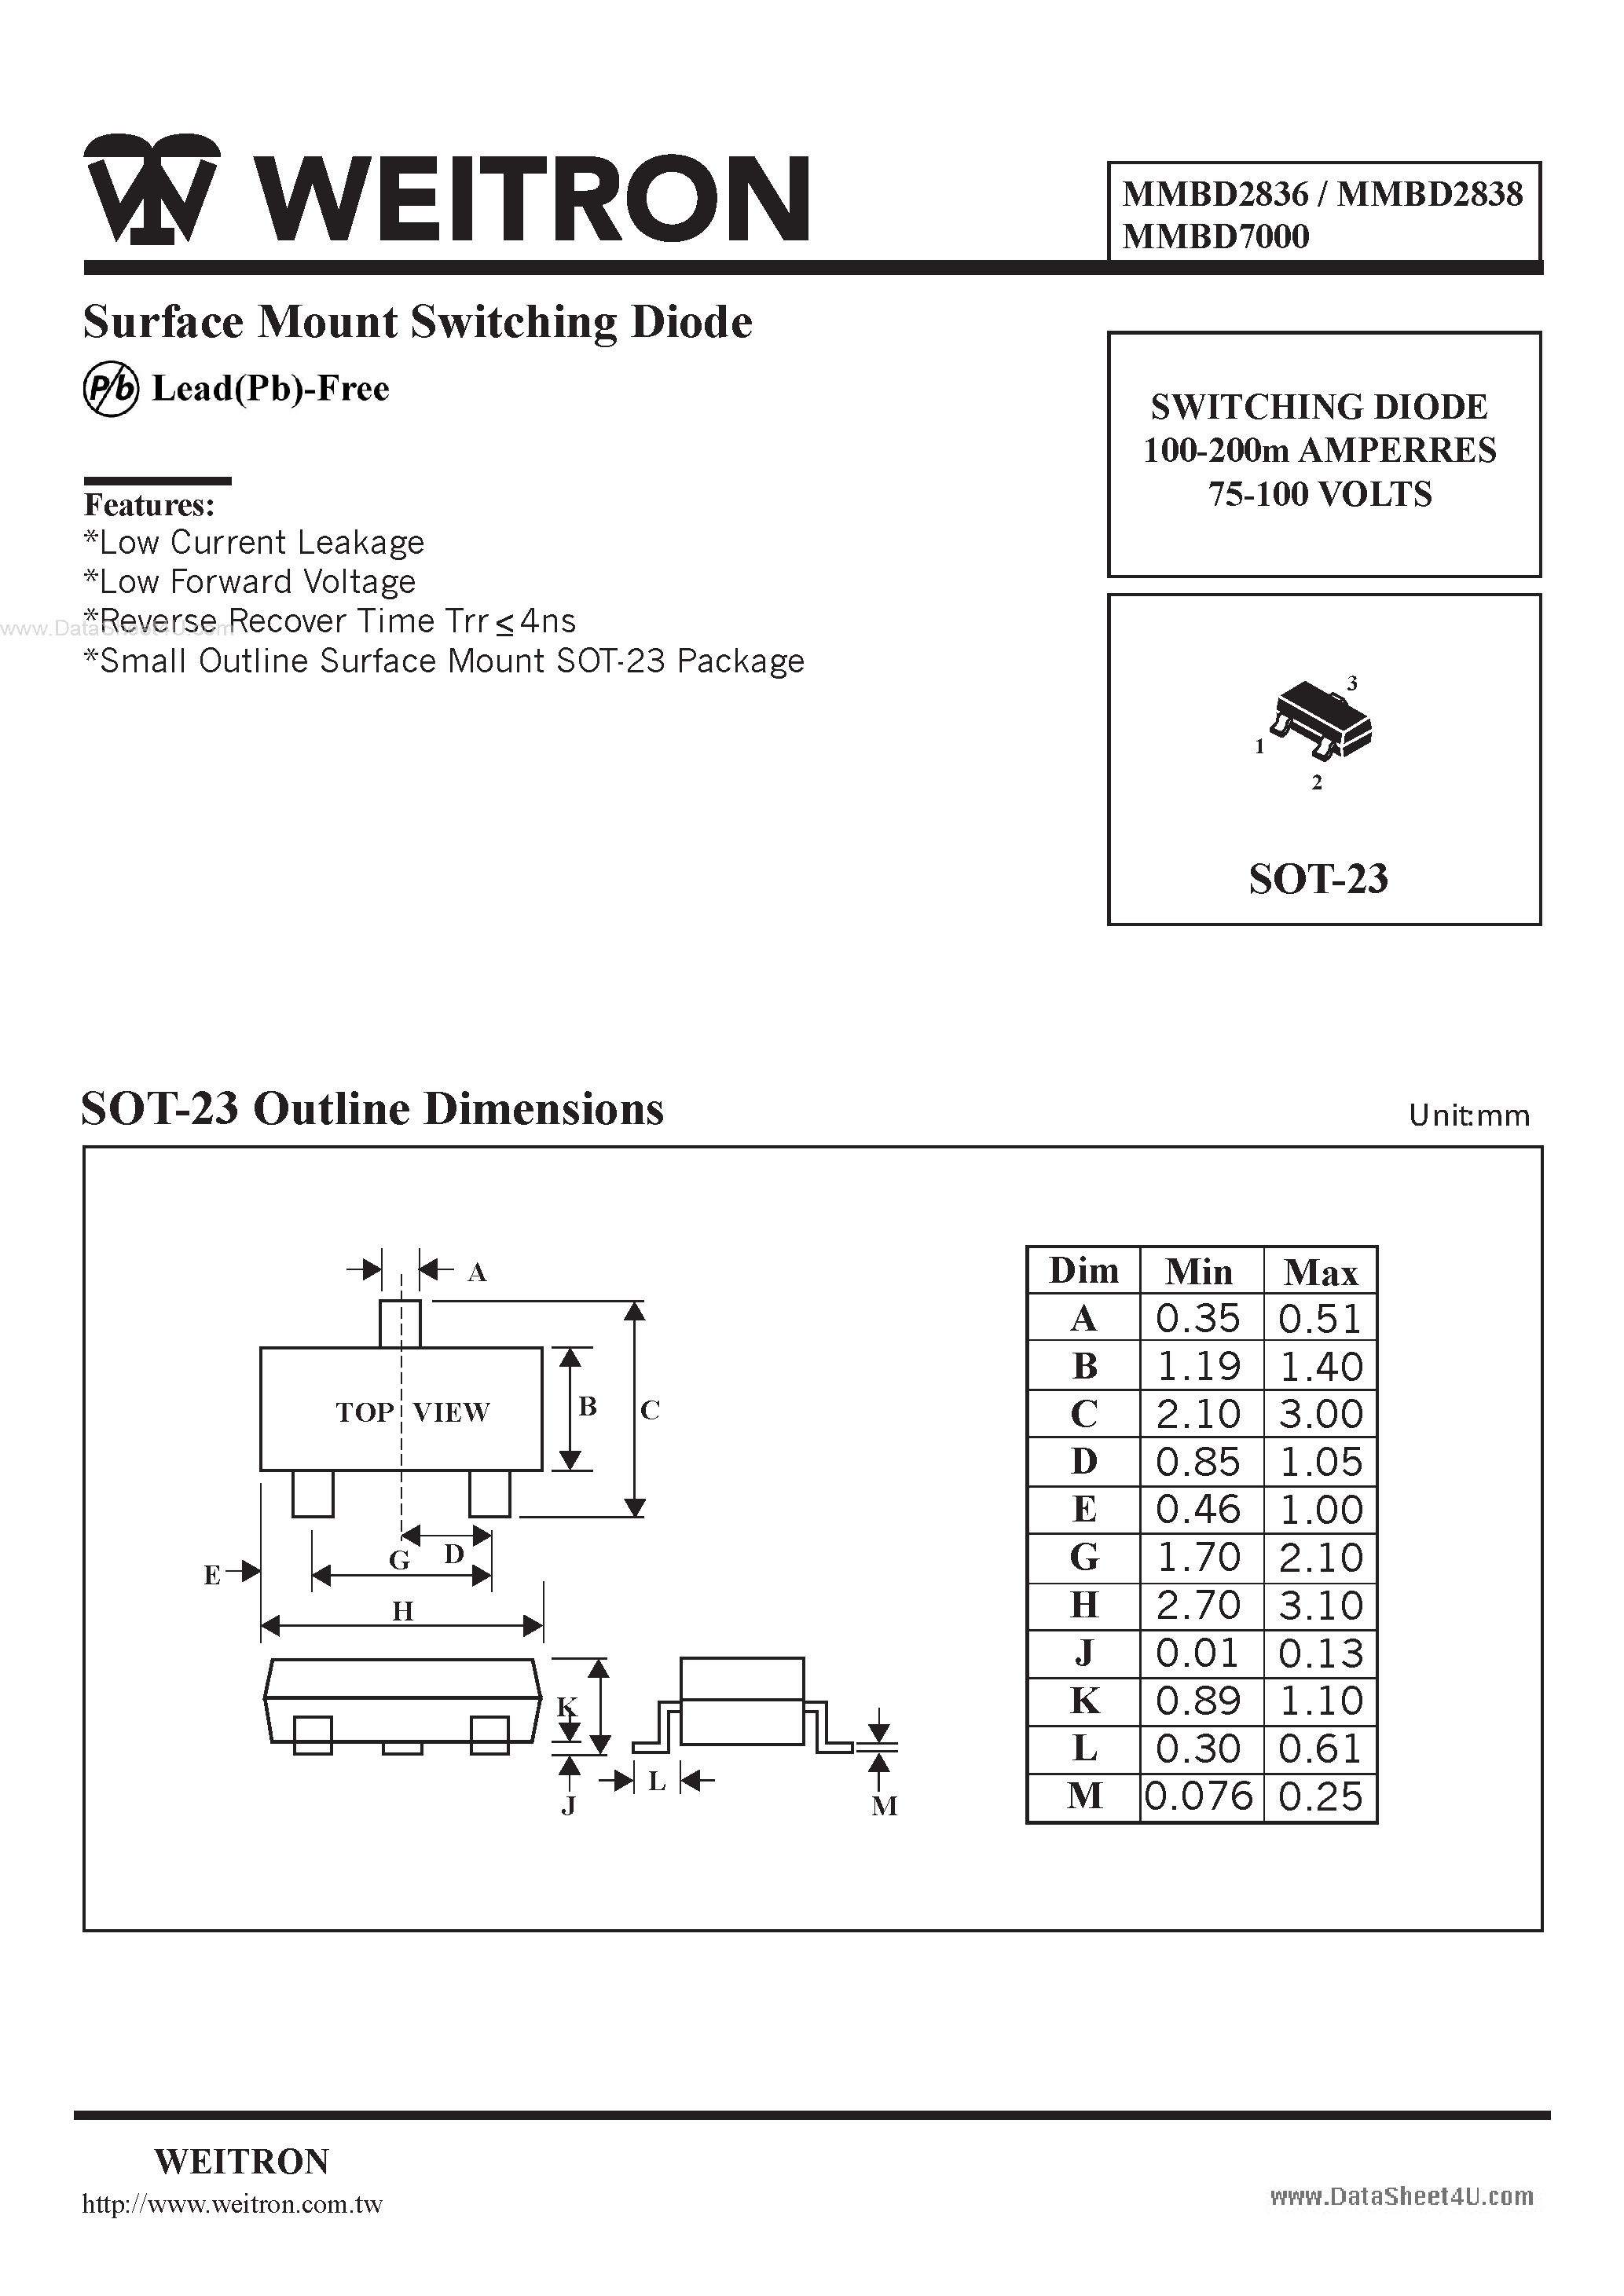 Datasheet MMBD2836 - Surface Mount Switching Diode page 1